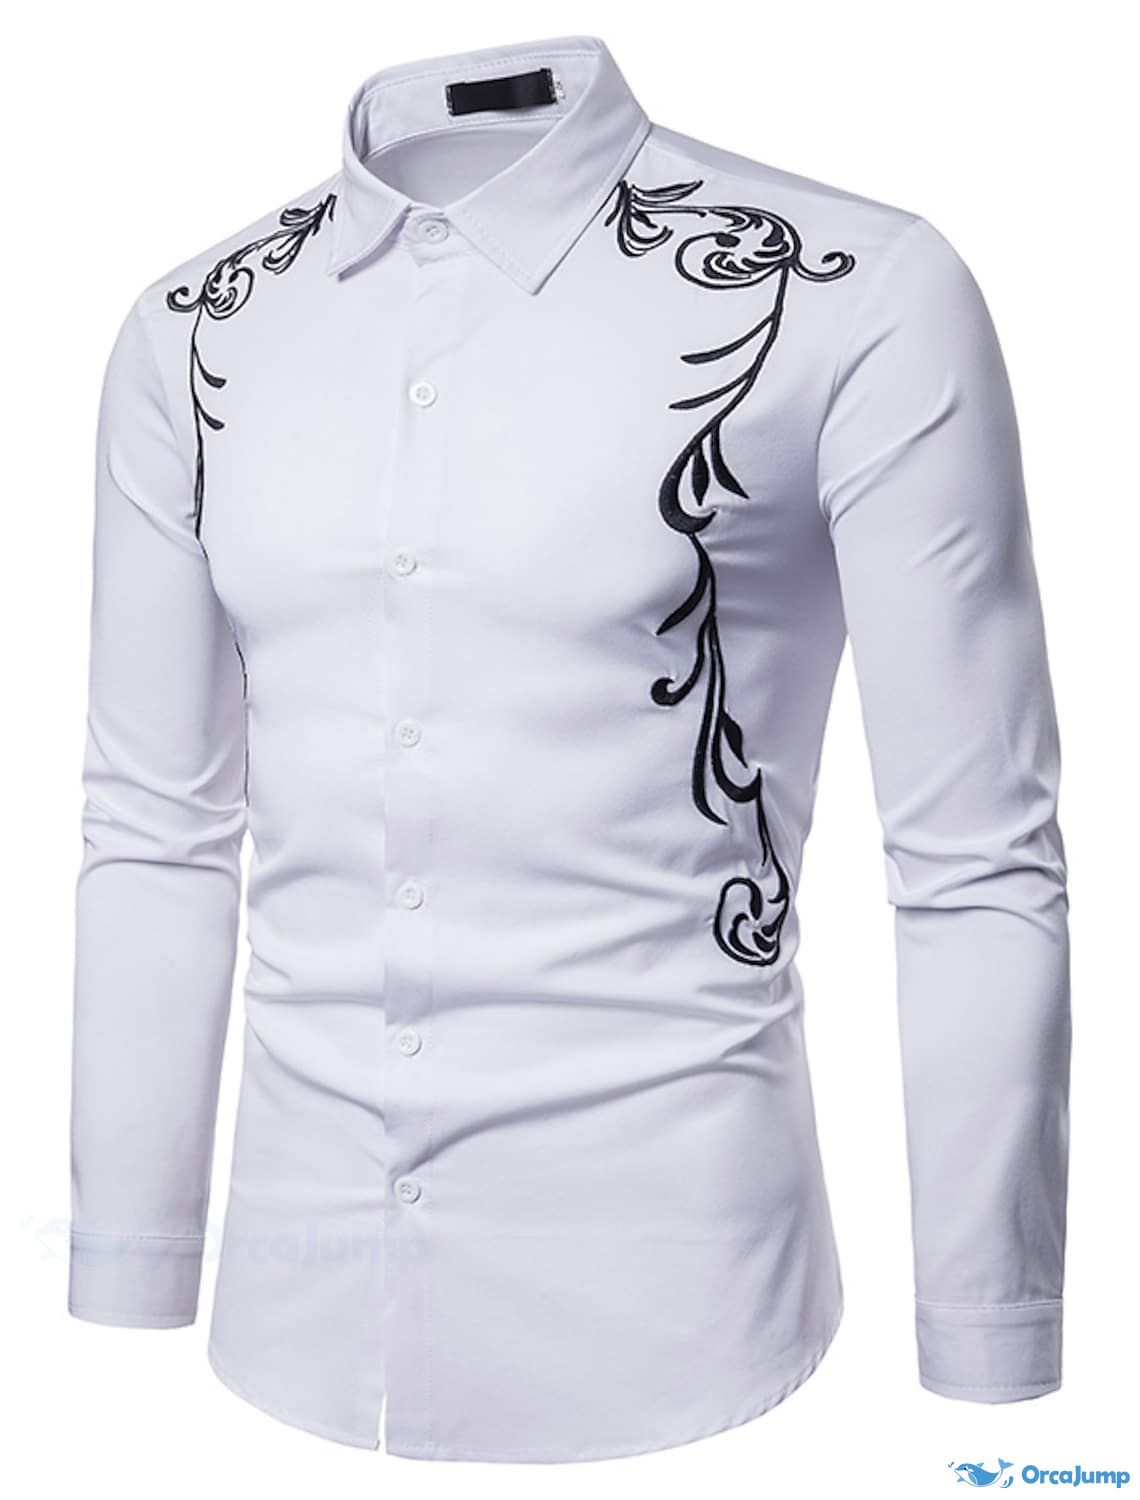 OrcaJump - Mens Tuxedo Floral Graphic Ball Shirt Classic Collar Navy W